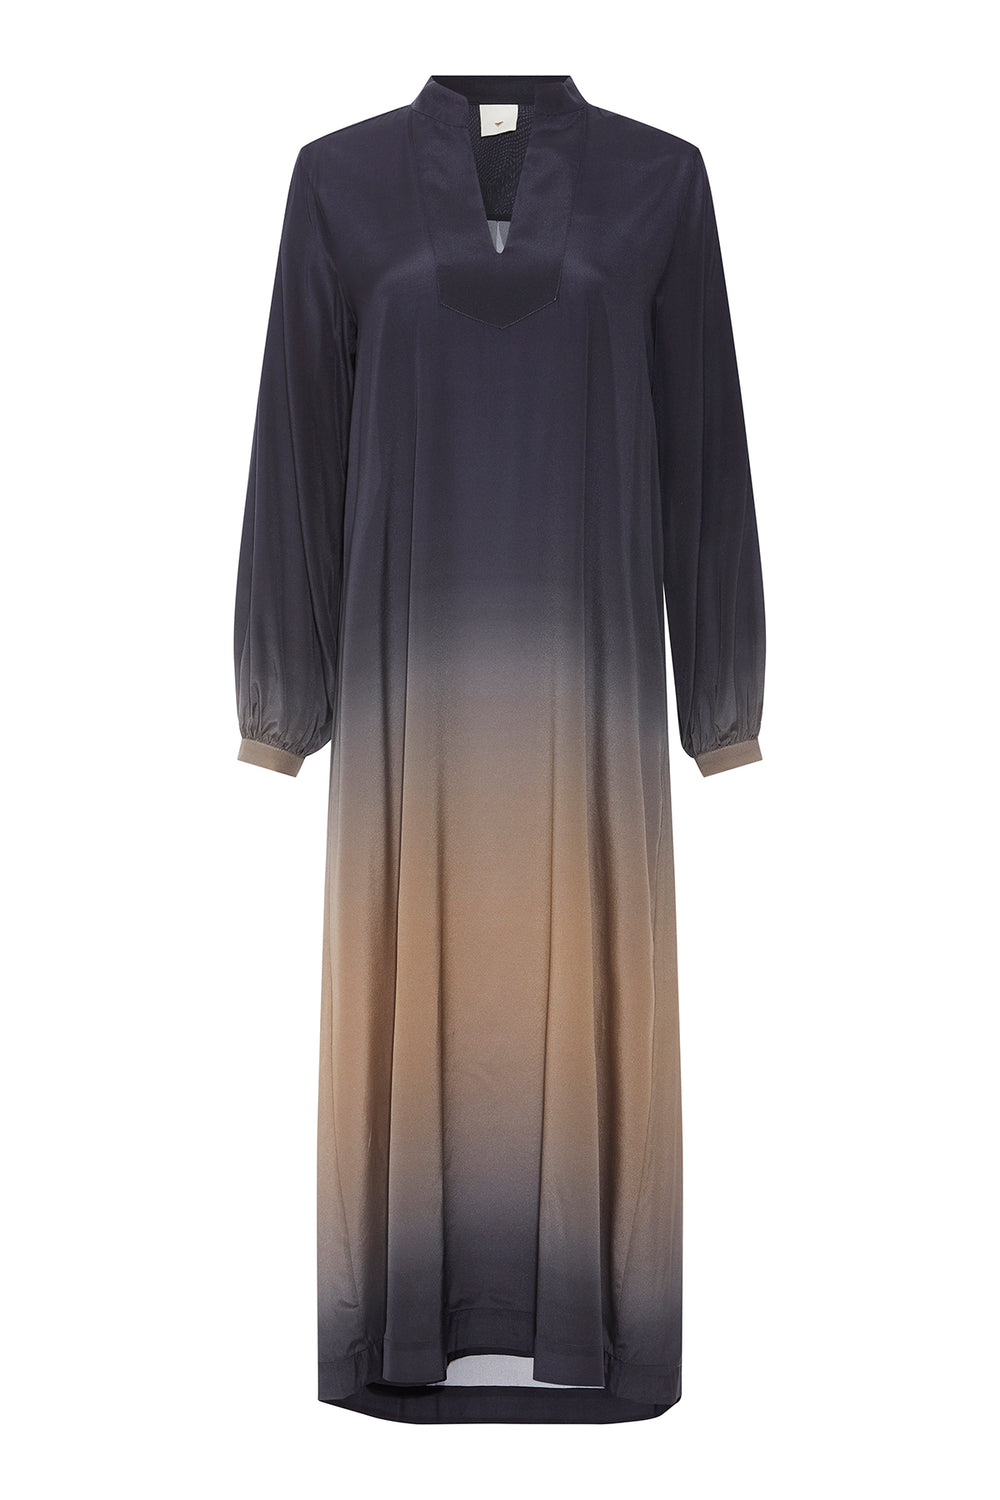 Heartmade Vanea dress HM DRESSES 185 Soft tint